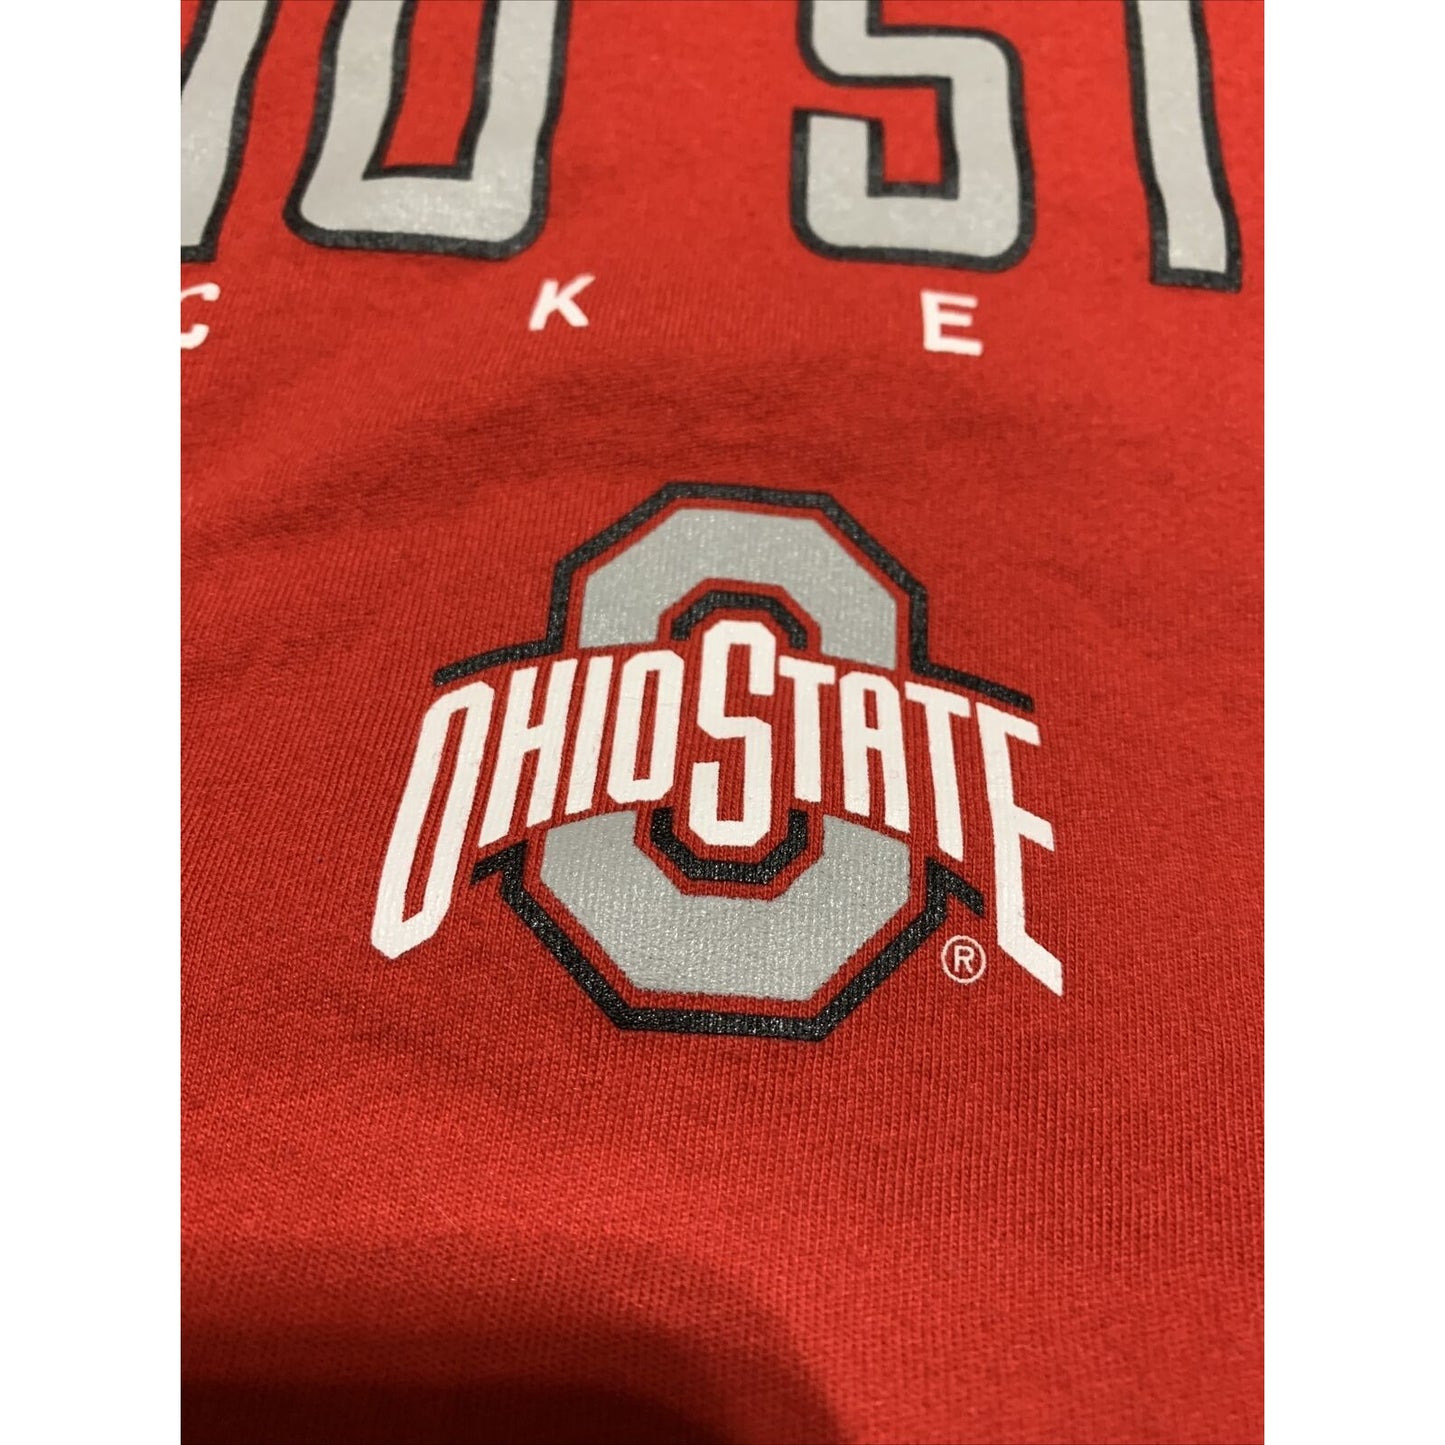 Nike " The Nike Tee " Red/Heather Red Ohio State Buckeyes Short Sleeve Mens LG